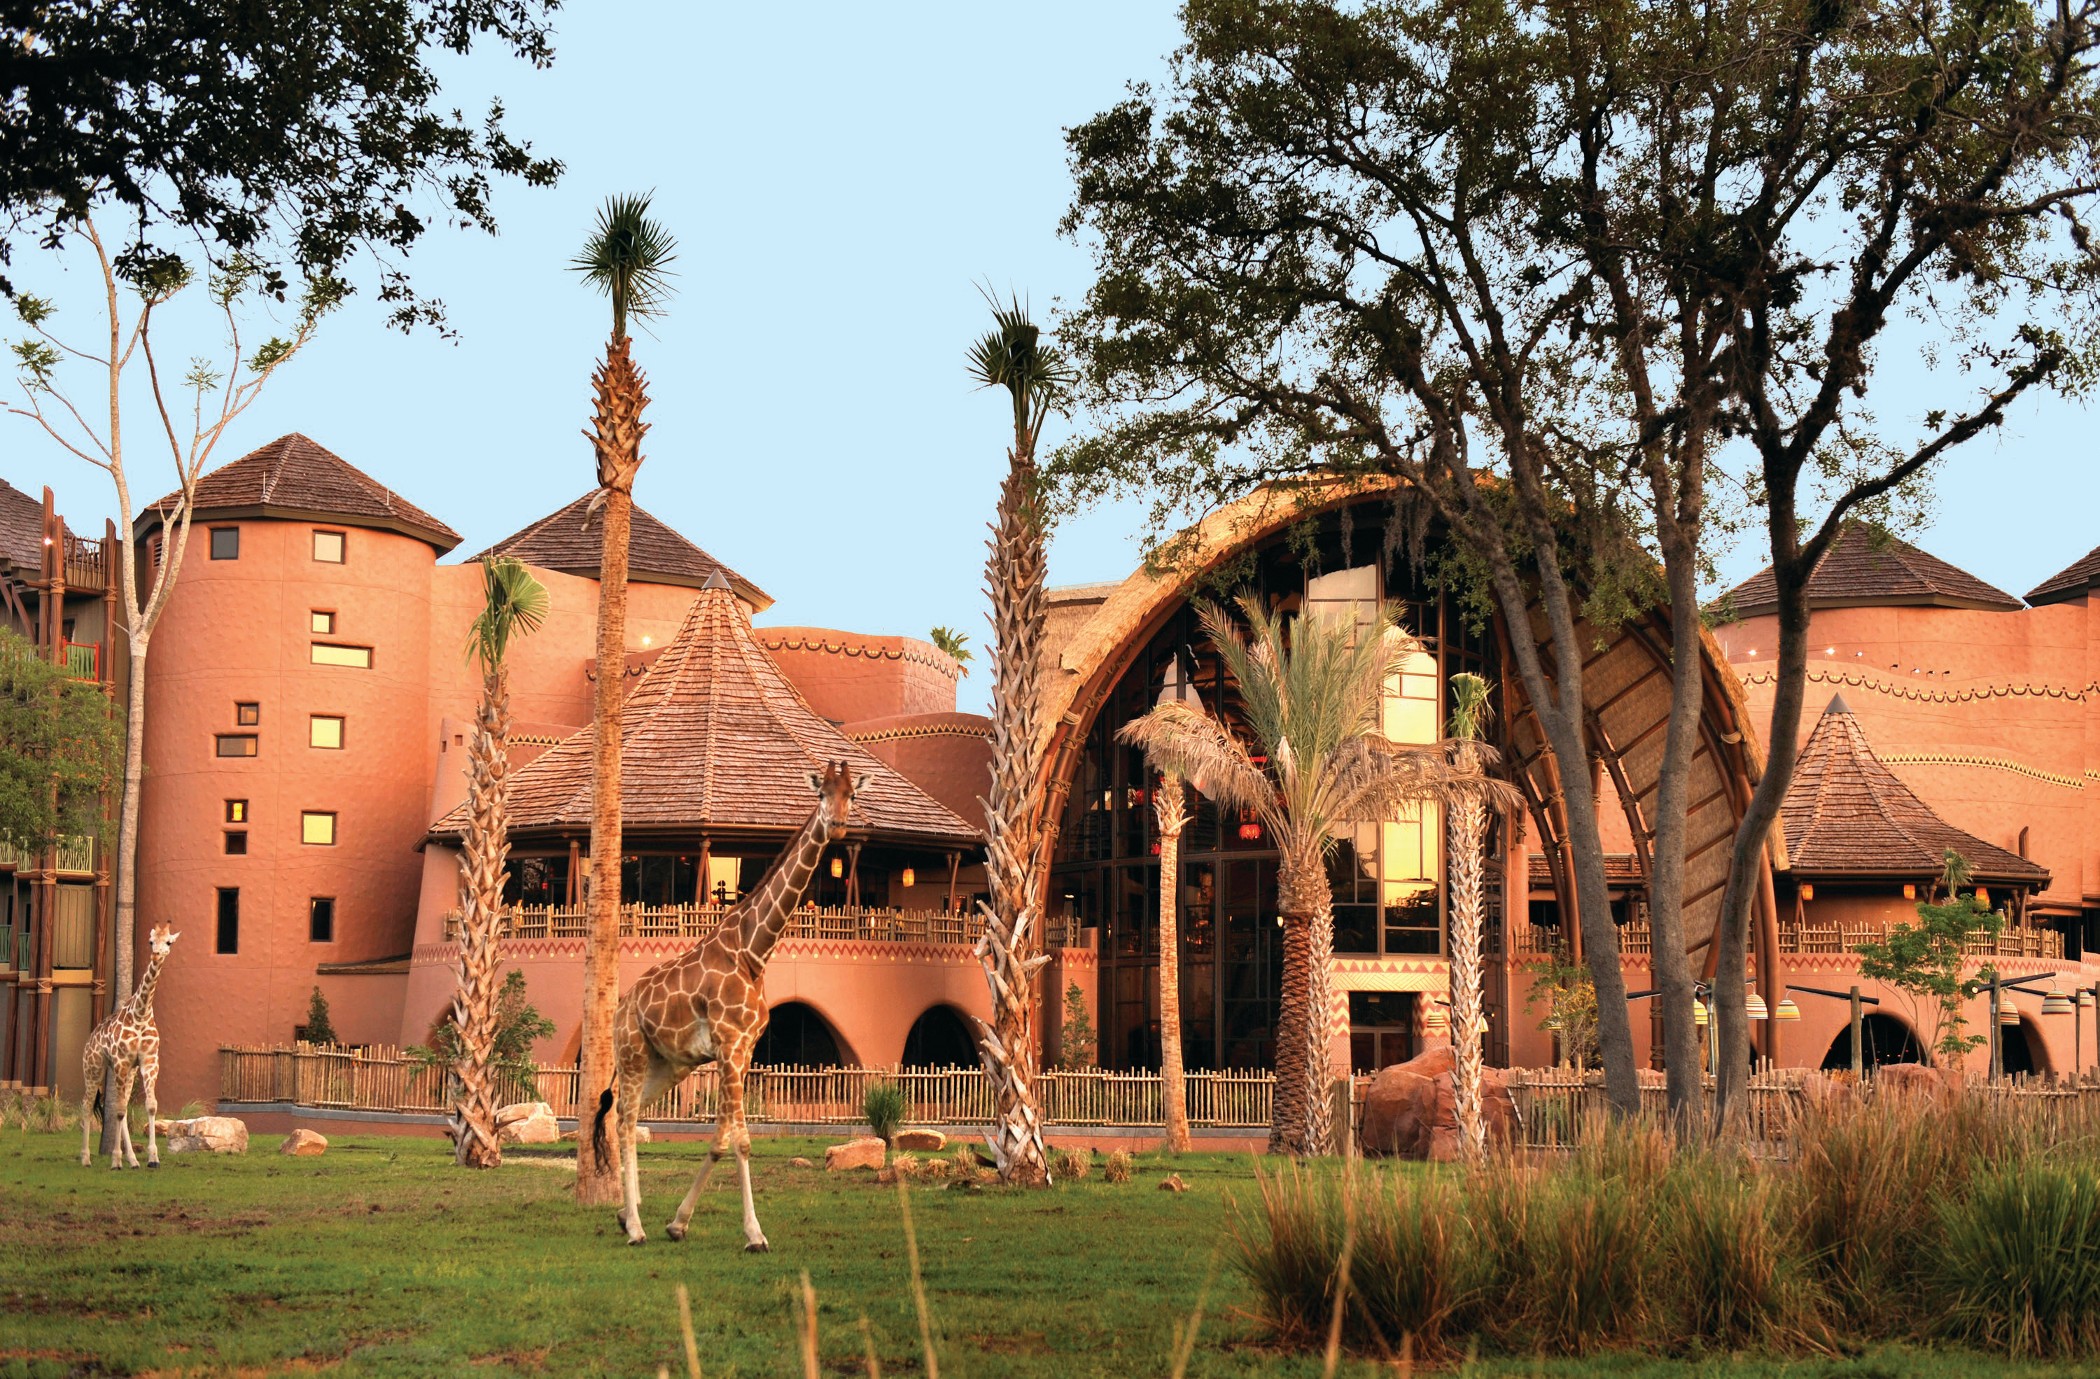 Disney's Animal Kingdom Lodge image